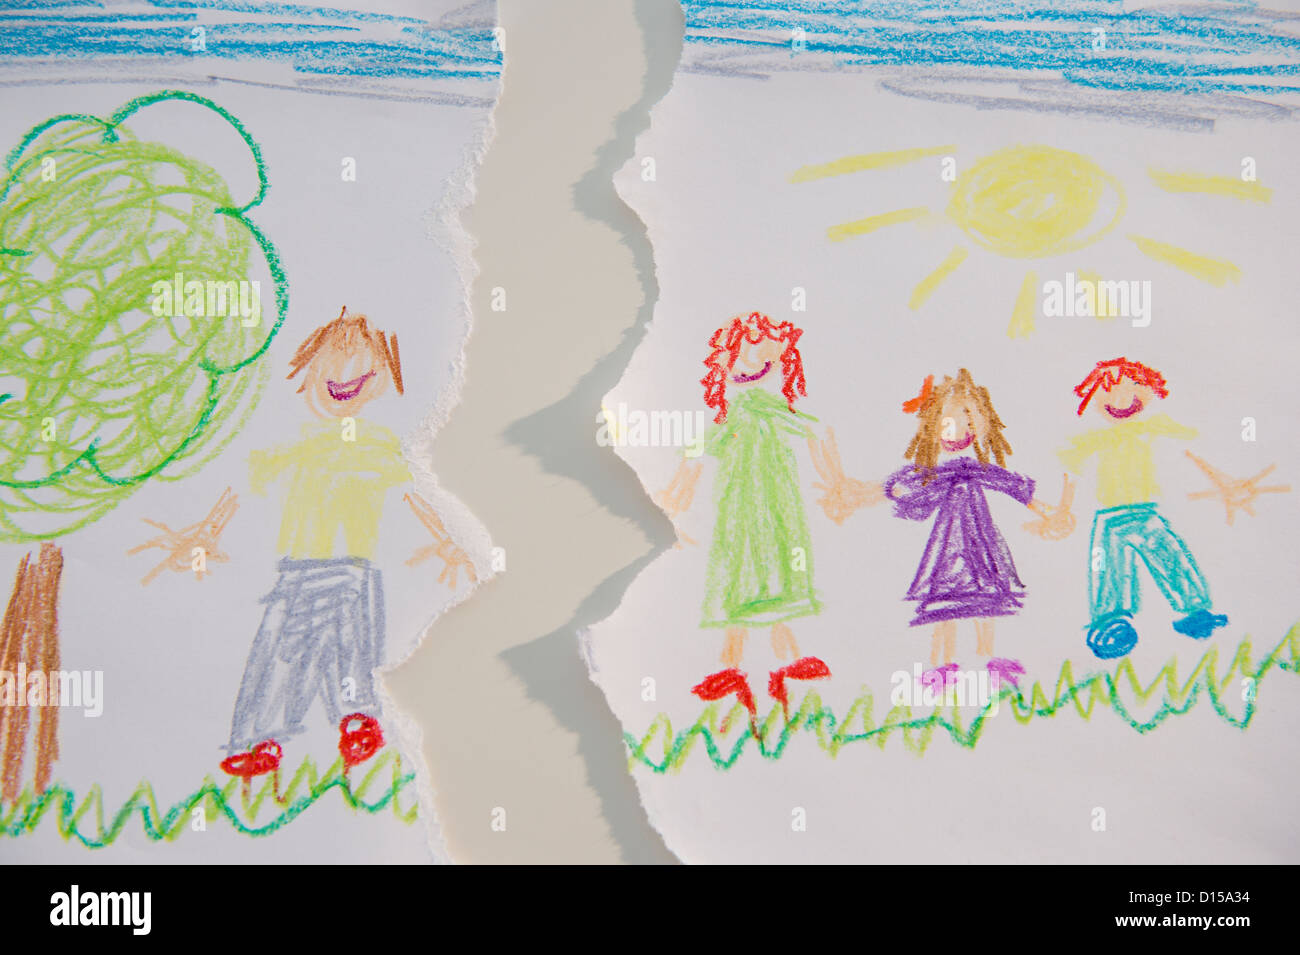 Children's drawing Stock Photo